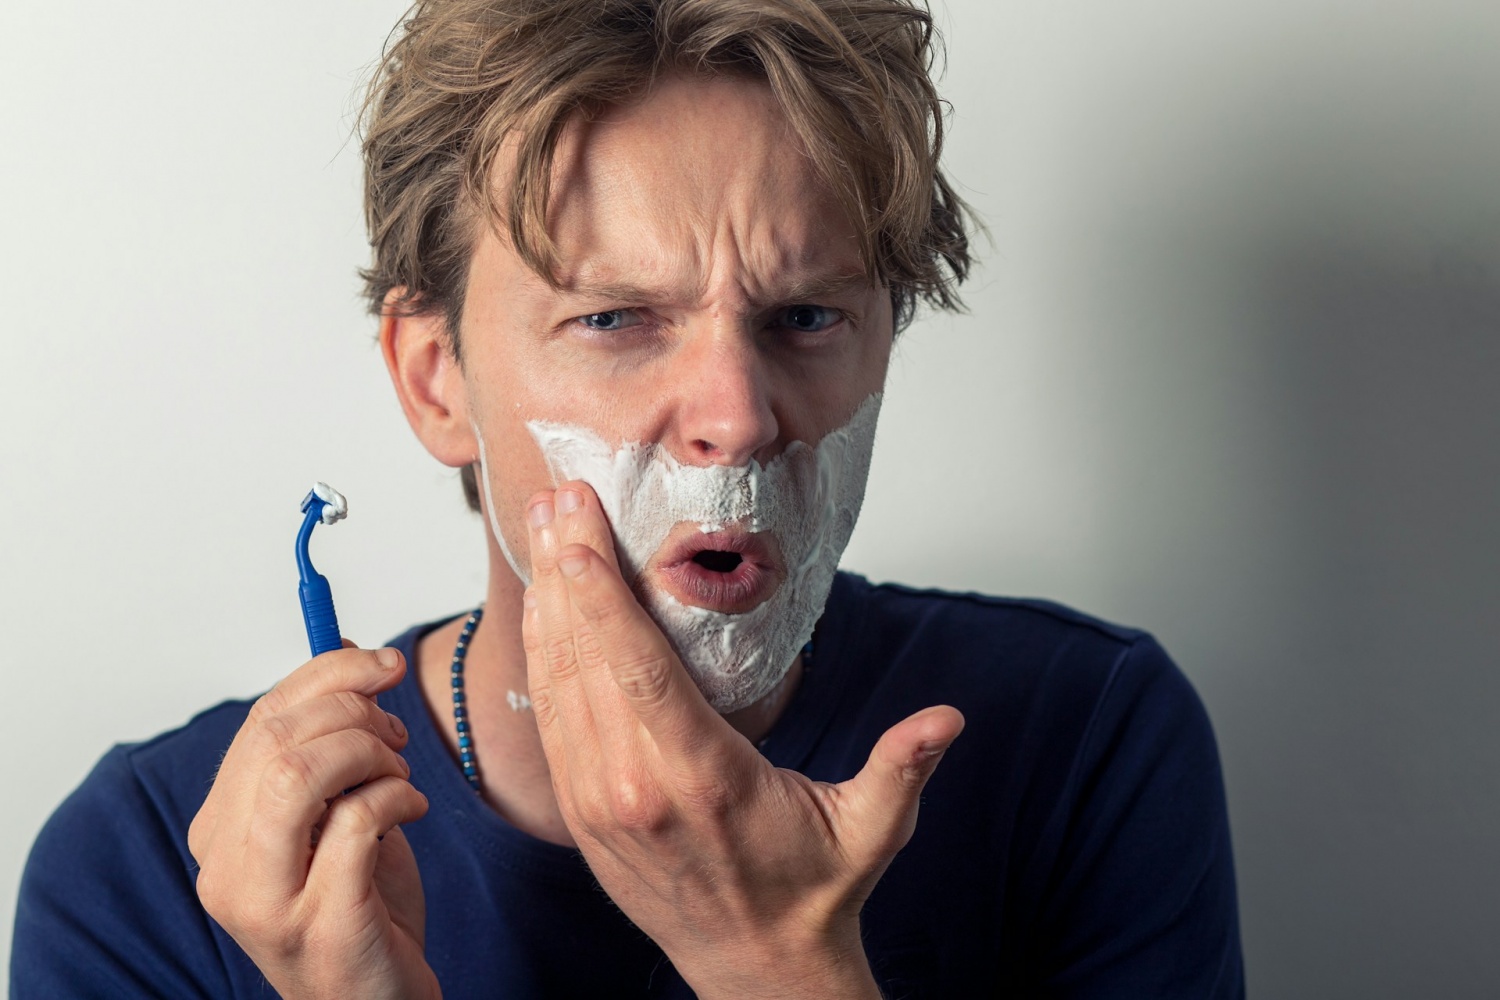 man with shaving cream